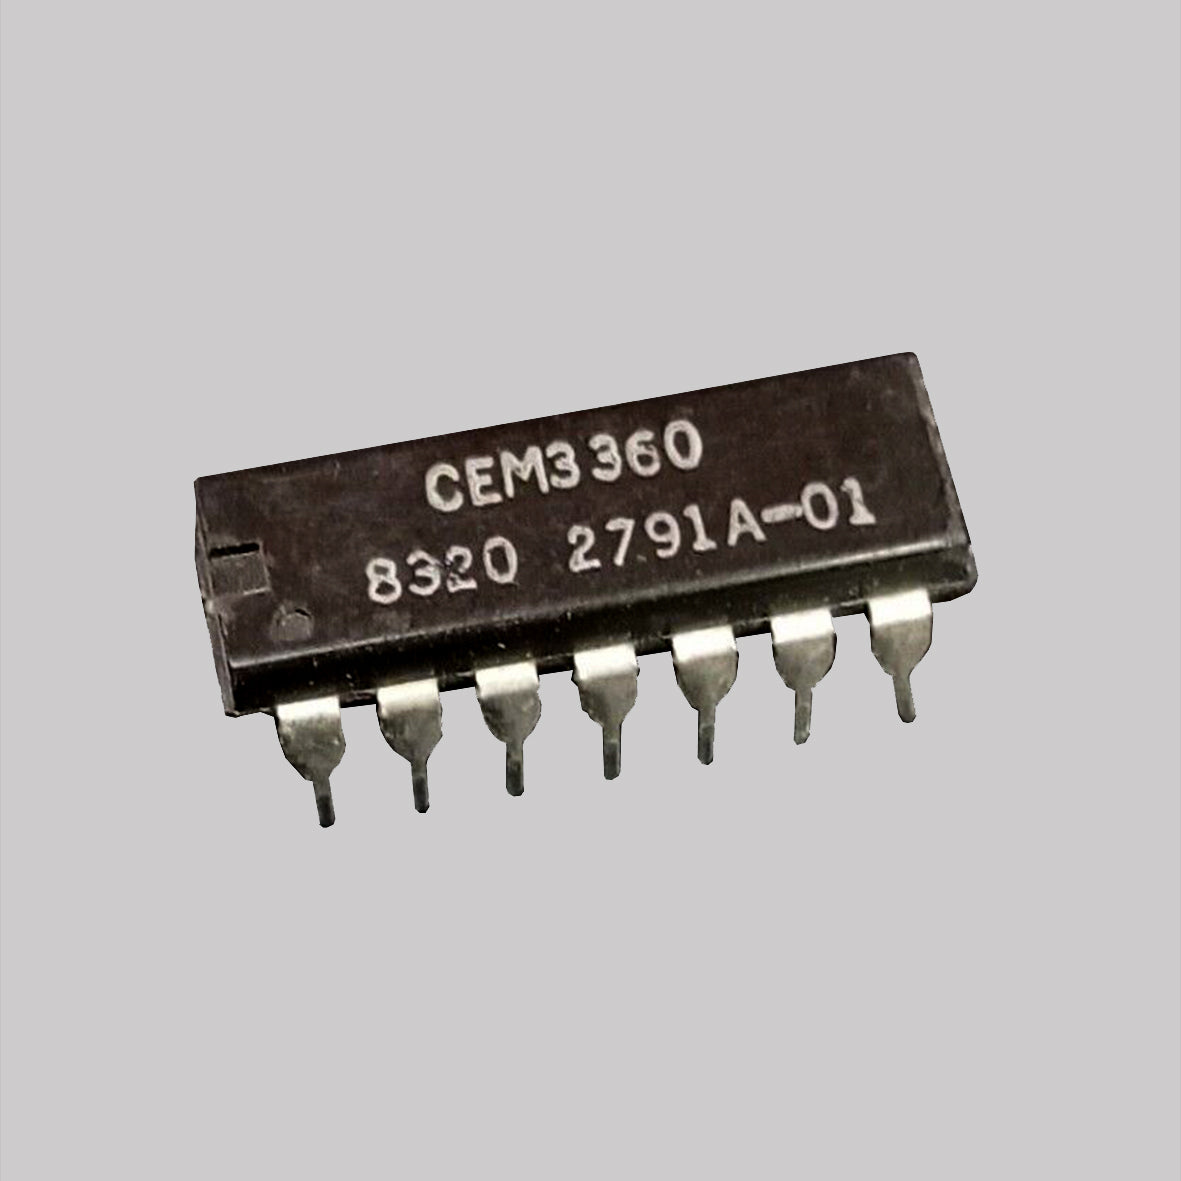 Original vintage CEM 3360 VCA IC